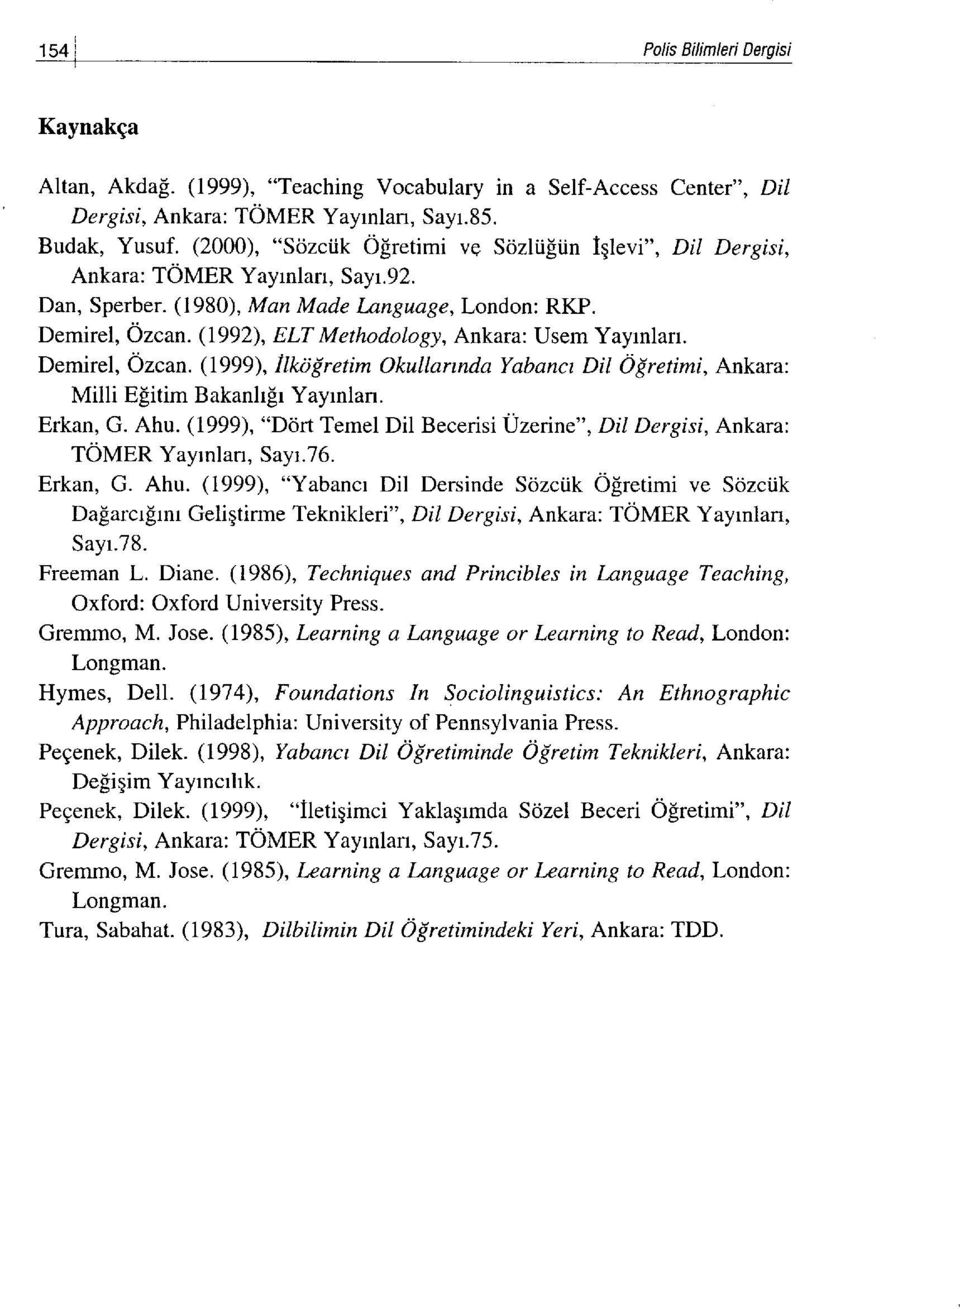 (1992), ELT Methodology, Ankara: Usem Yayrnlarr. Demirel, 6zcan. (1999), Ilkddretim Okullannda Yabanu Dil O{retimi, Ankara: Milli Efitim Bakanhfr Yayrnlan. Erkan, G. Ahu.